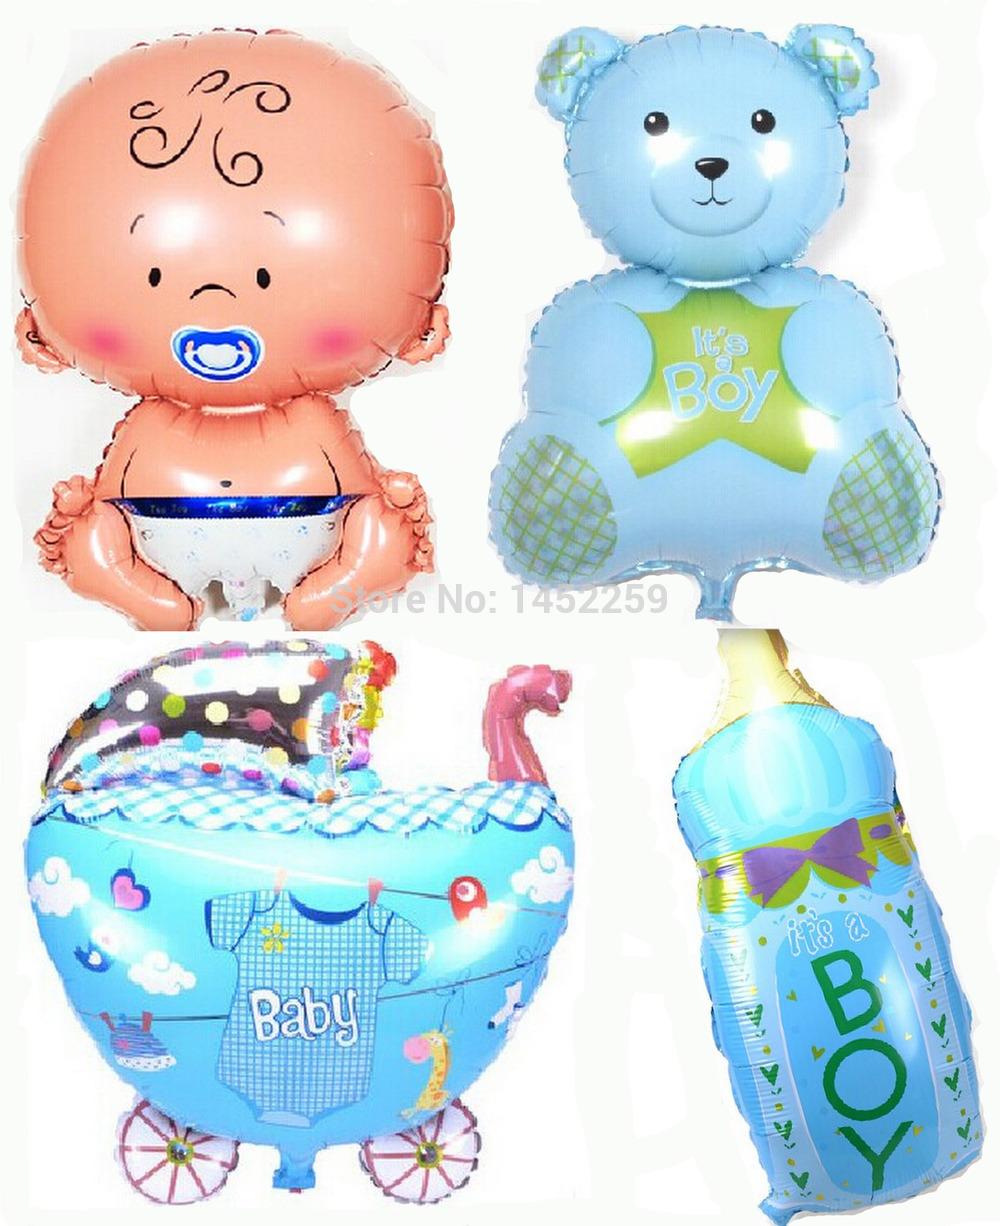  ο - -  -  ǳ 4pcs - 峭 ǳ ǳ ǳ Ʈ/Free shipping new baby - baby - Bears - bottle balloon 4pcs-lots of children&s toys balloon who